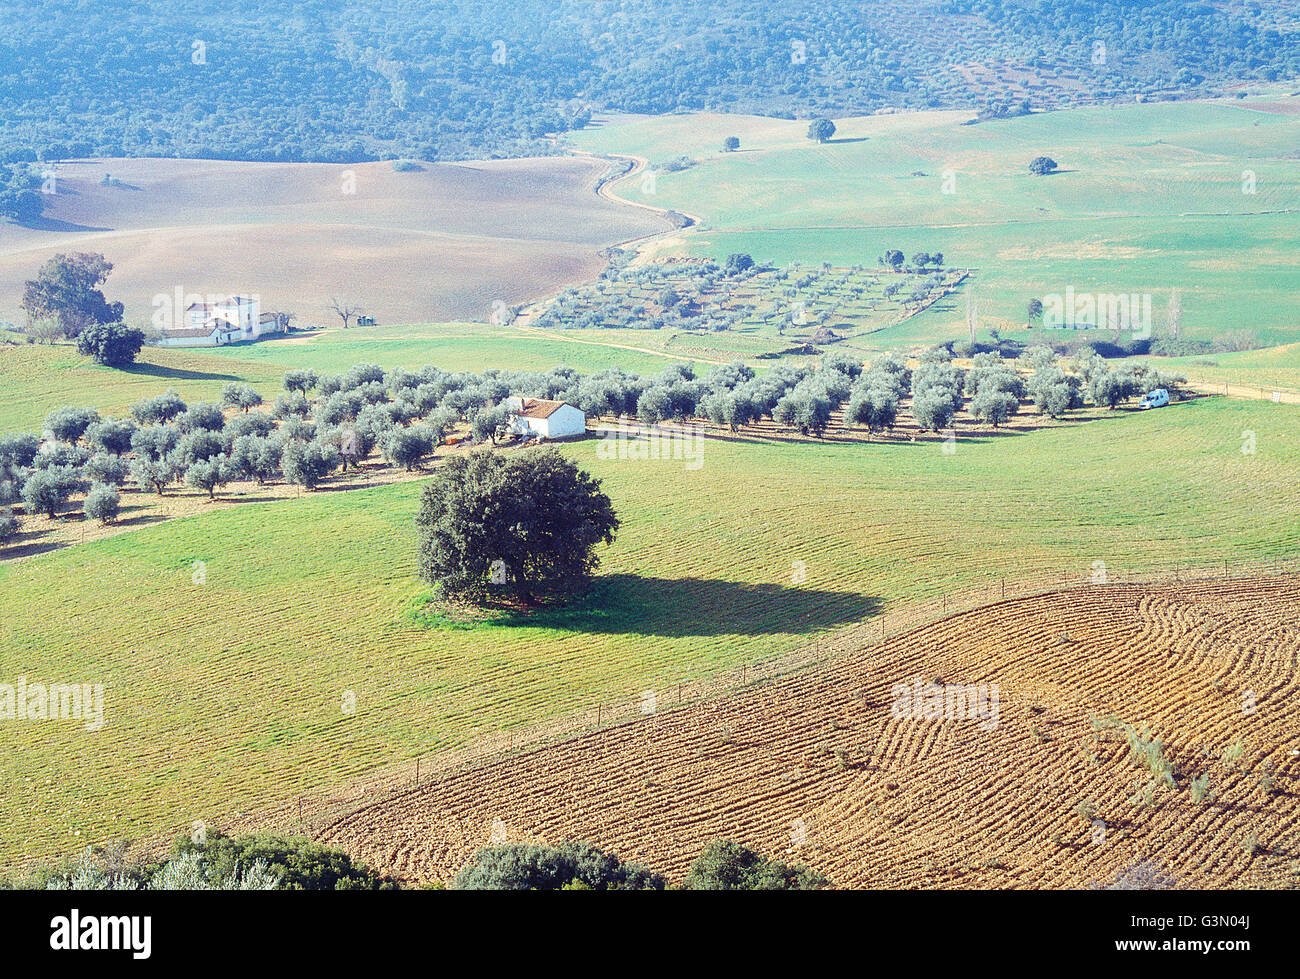 Les oliveraies et les champs de culture. Montes de Toledo, Castilla La Mancha, Espagne. Banque D'Images